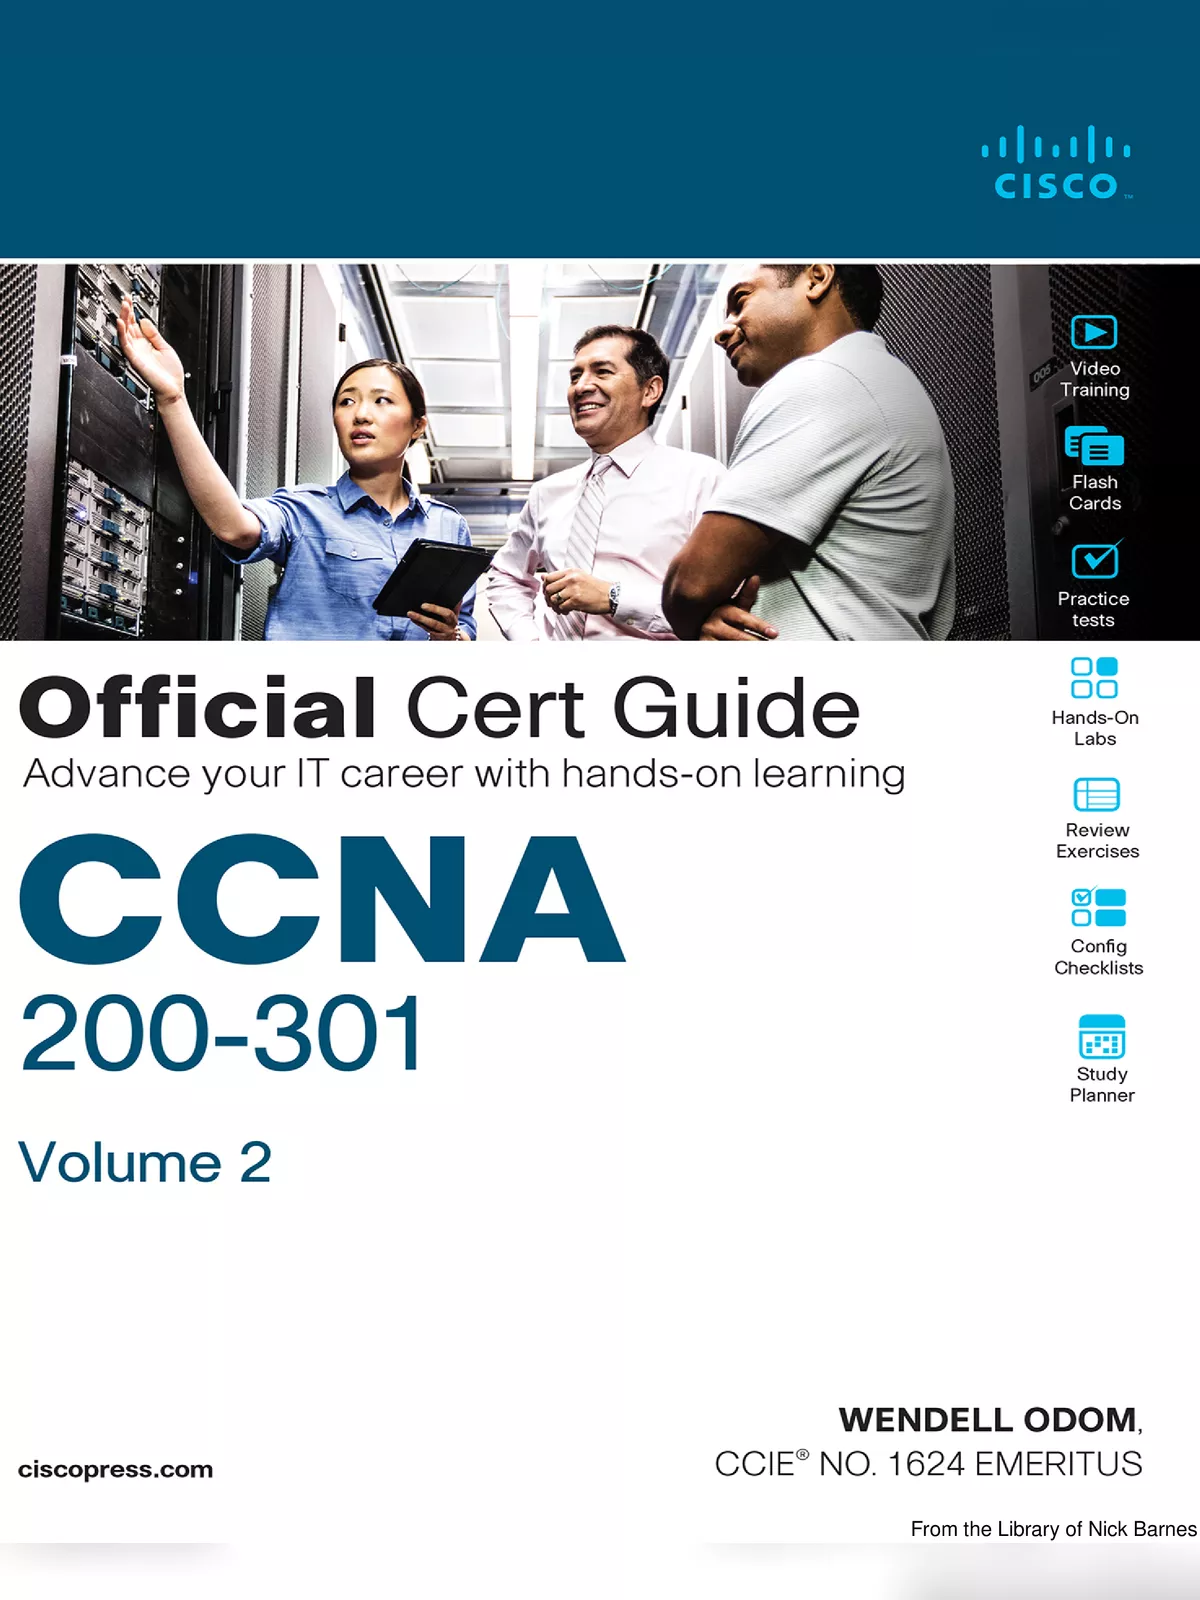 CCNA 200-301 Official Cert Guide Volume 2